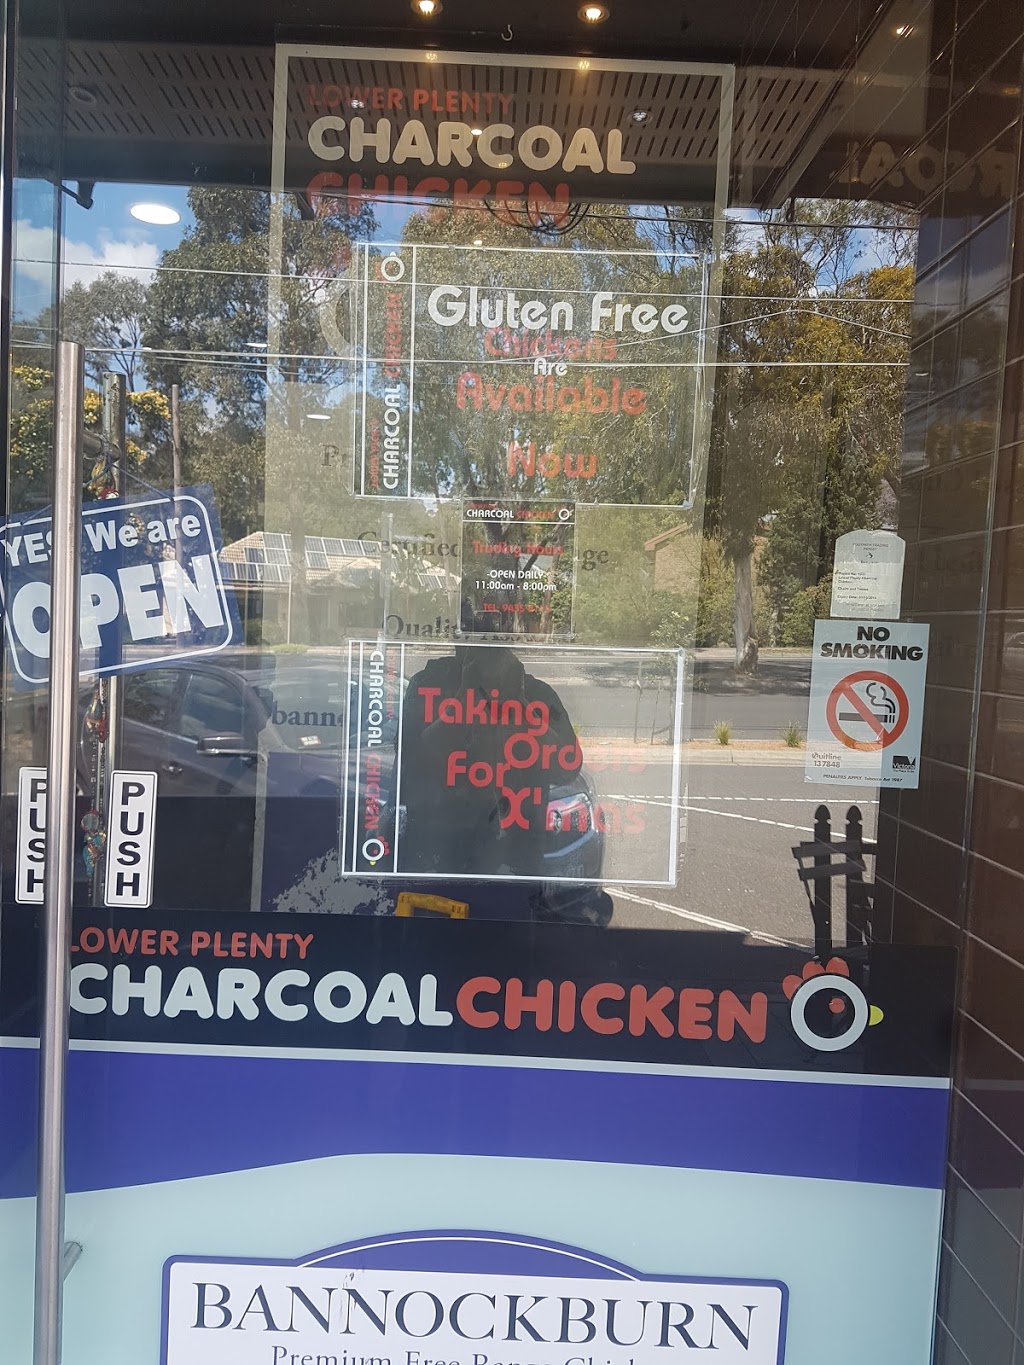 Lower Plenty Charcoal Chicken | restaurant | Lower Plenty VIC 3093, Australia